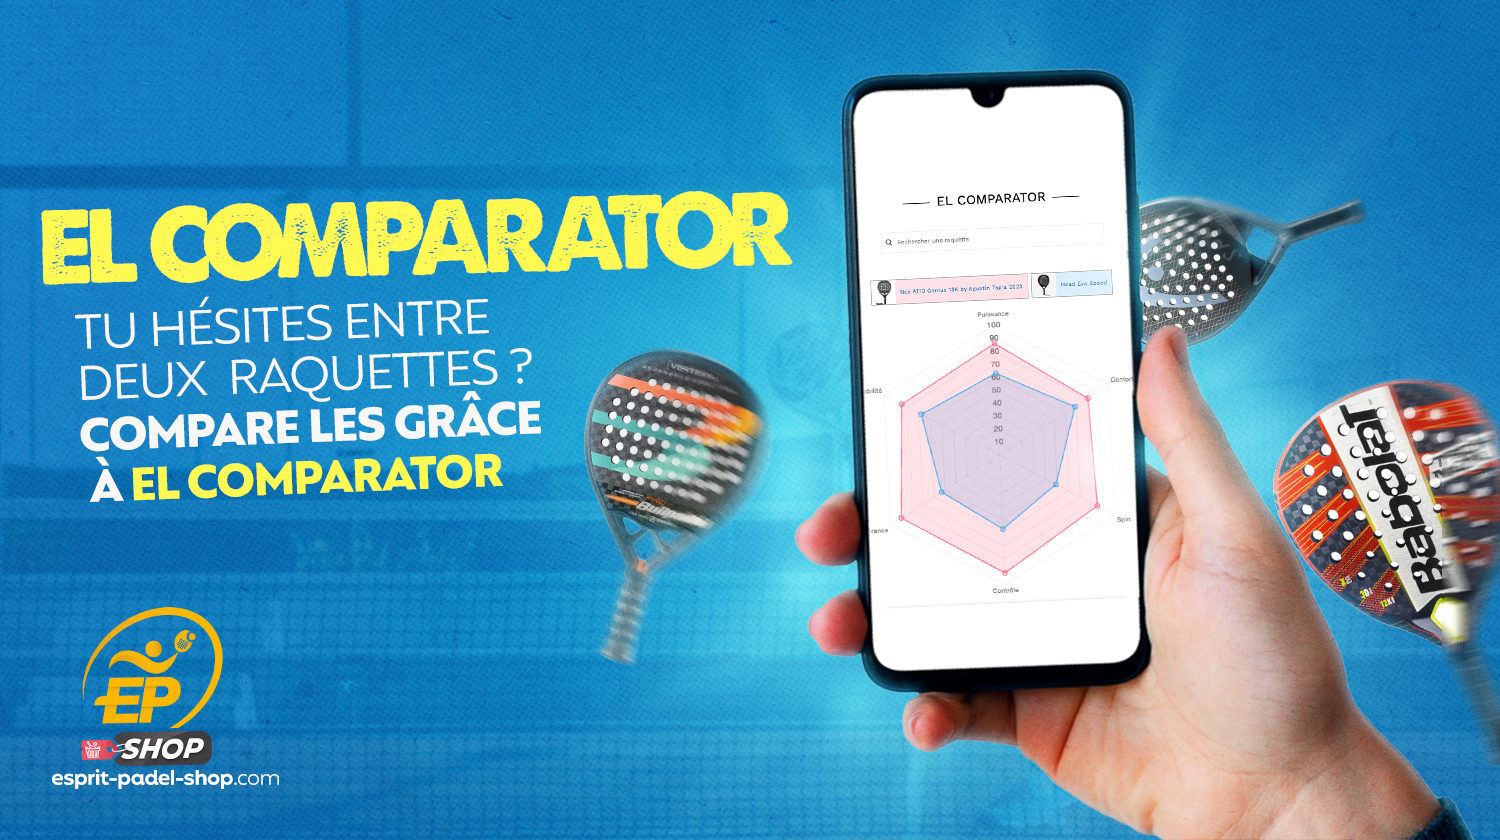 "El Comparator" lander på Esprit Padel Shop